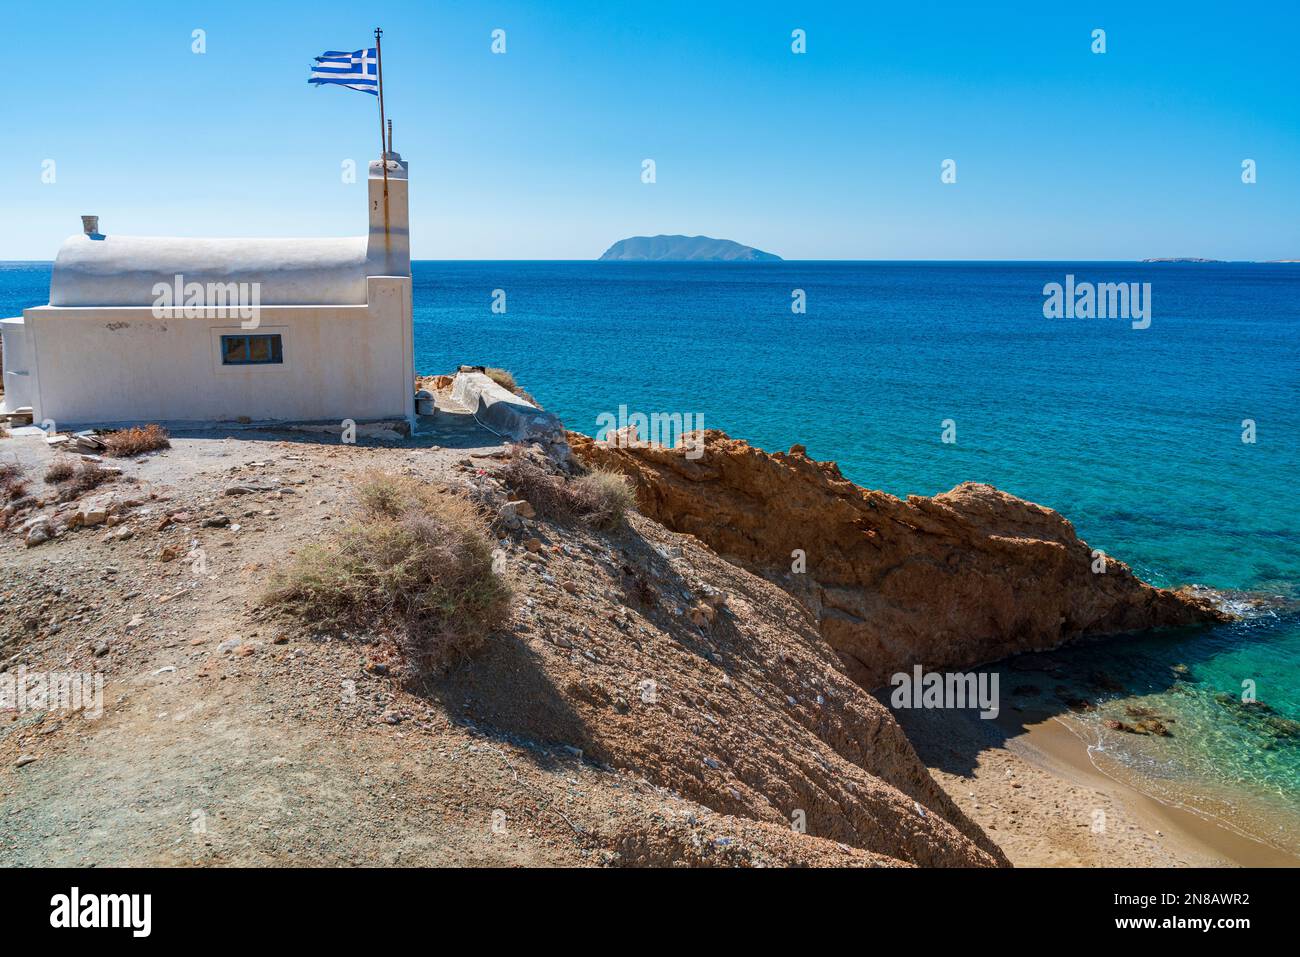 Agioi Anargyroi beach and church, Anafi Stock Photo